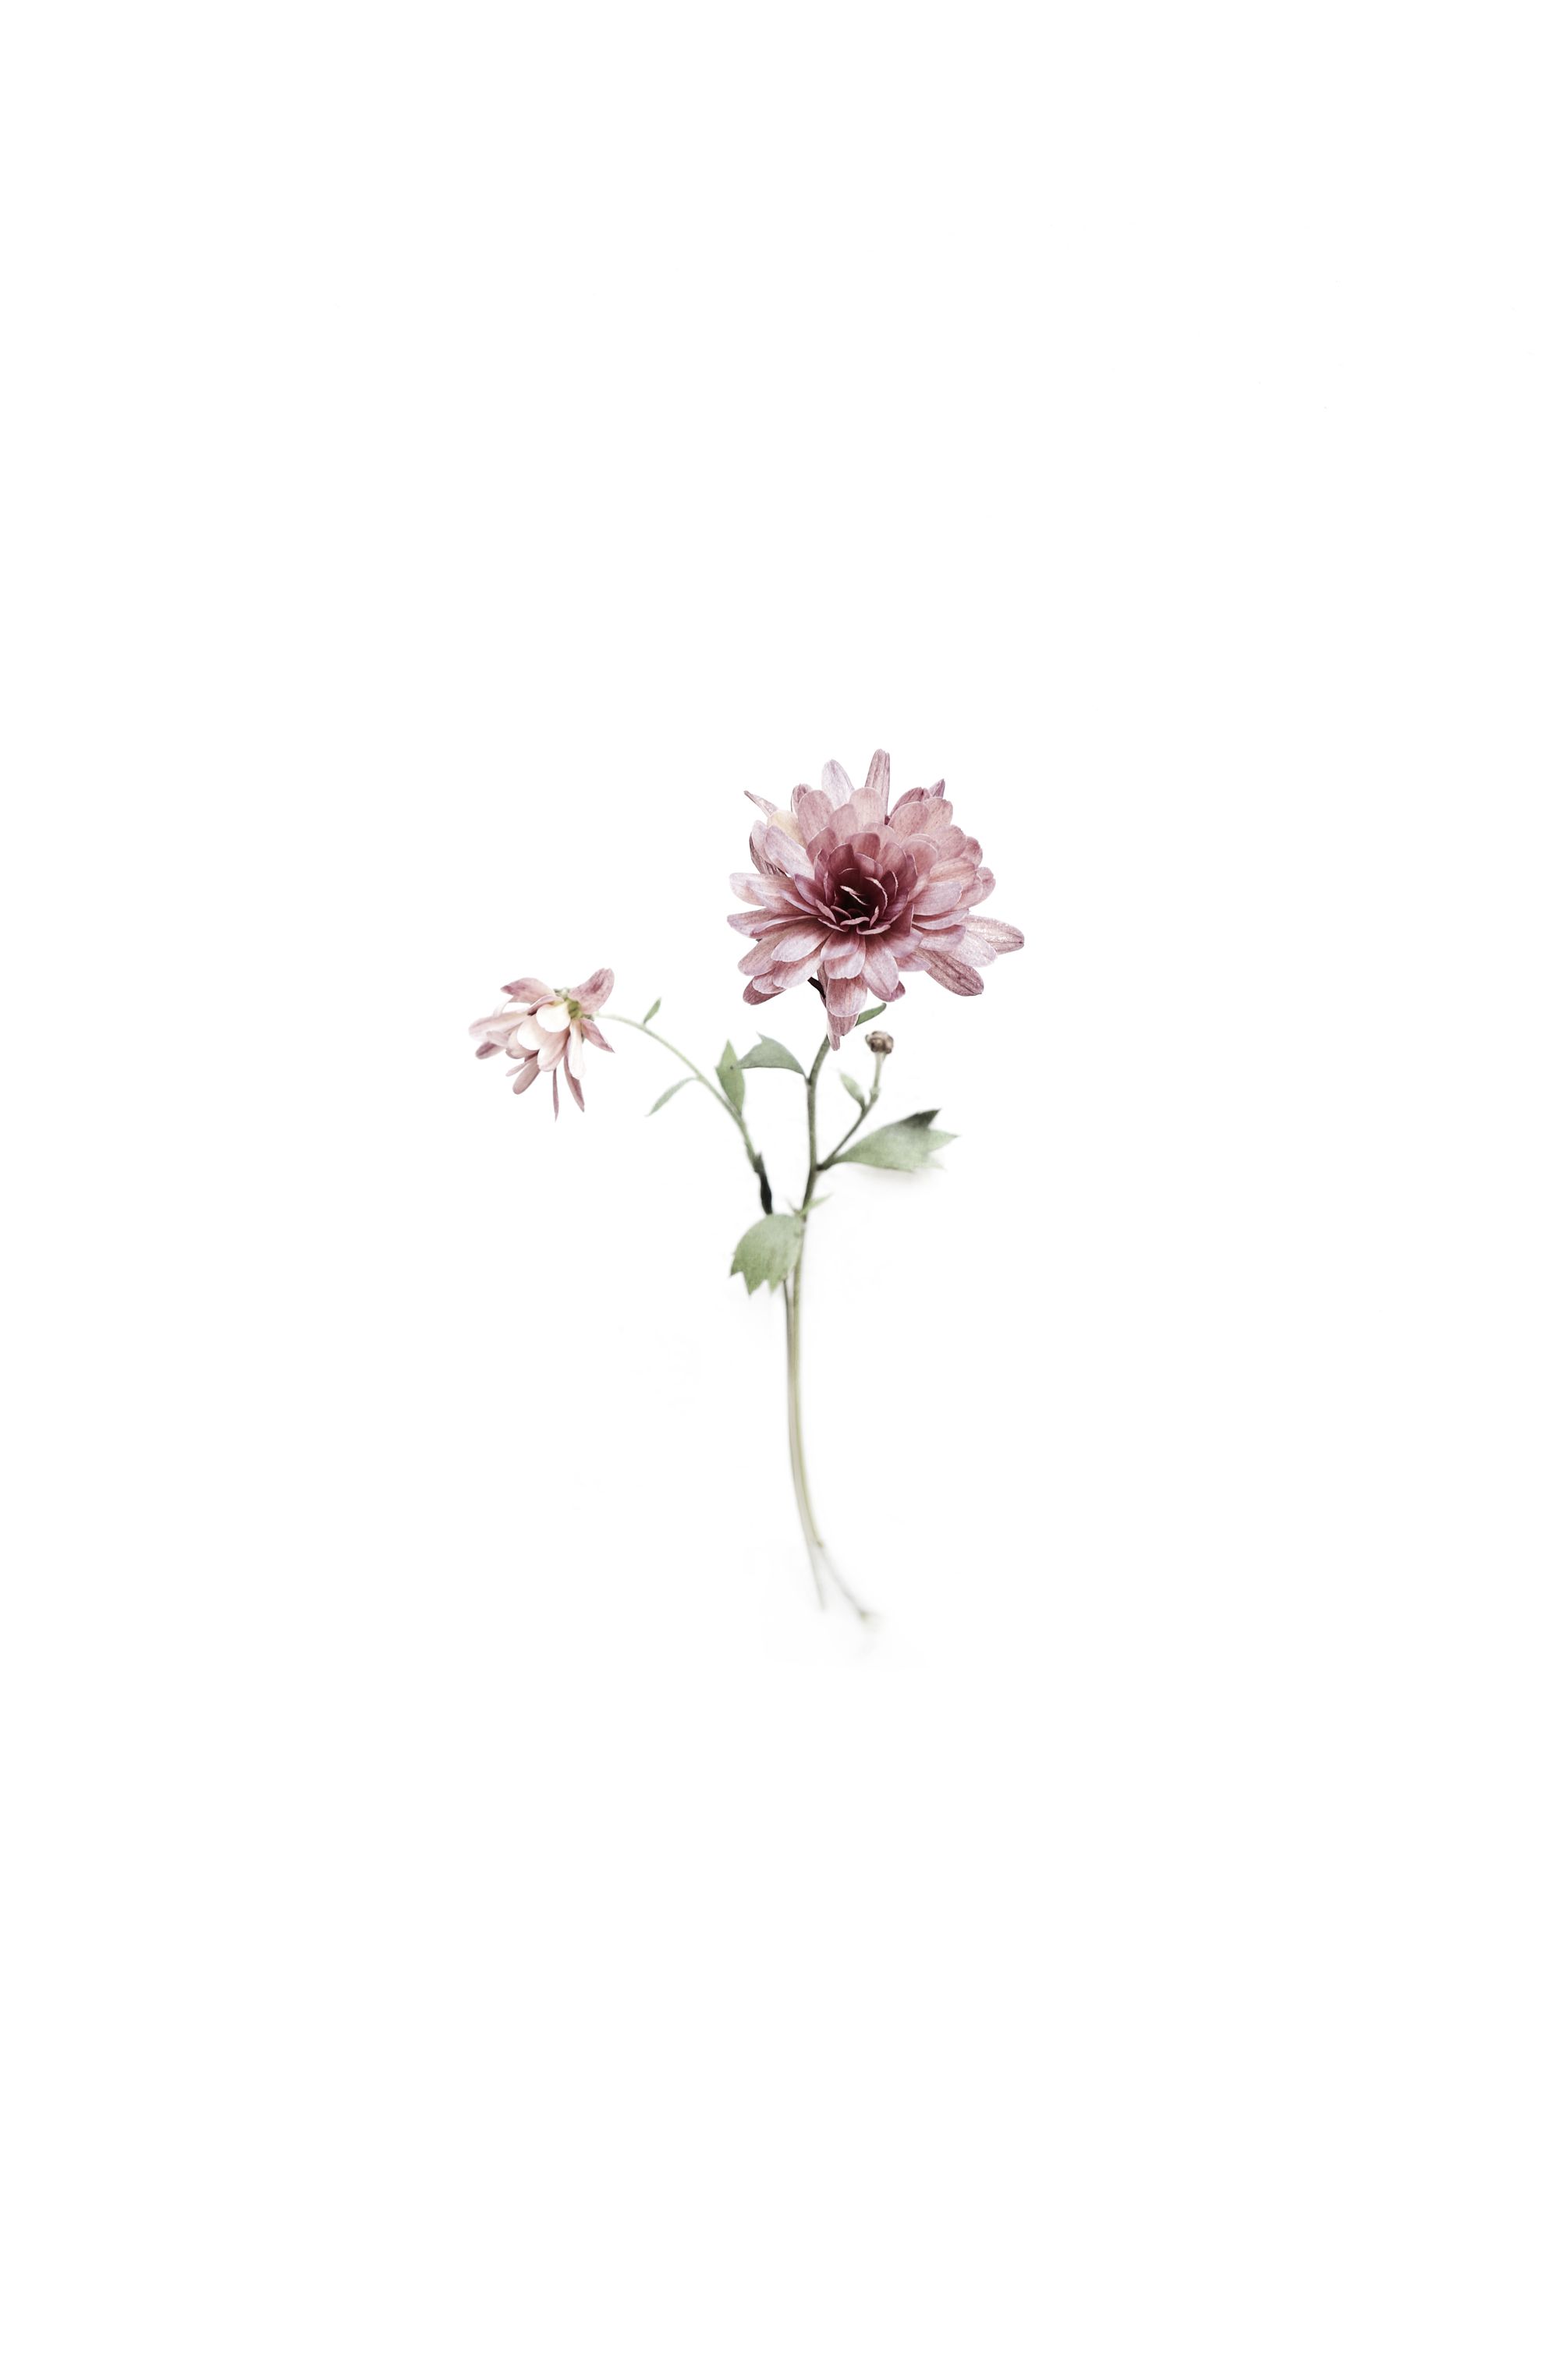 mum. STILL (mary jo hoffman). Flowers instagram, Flower icons